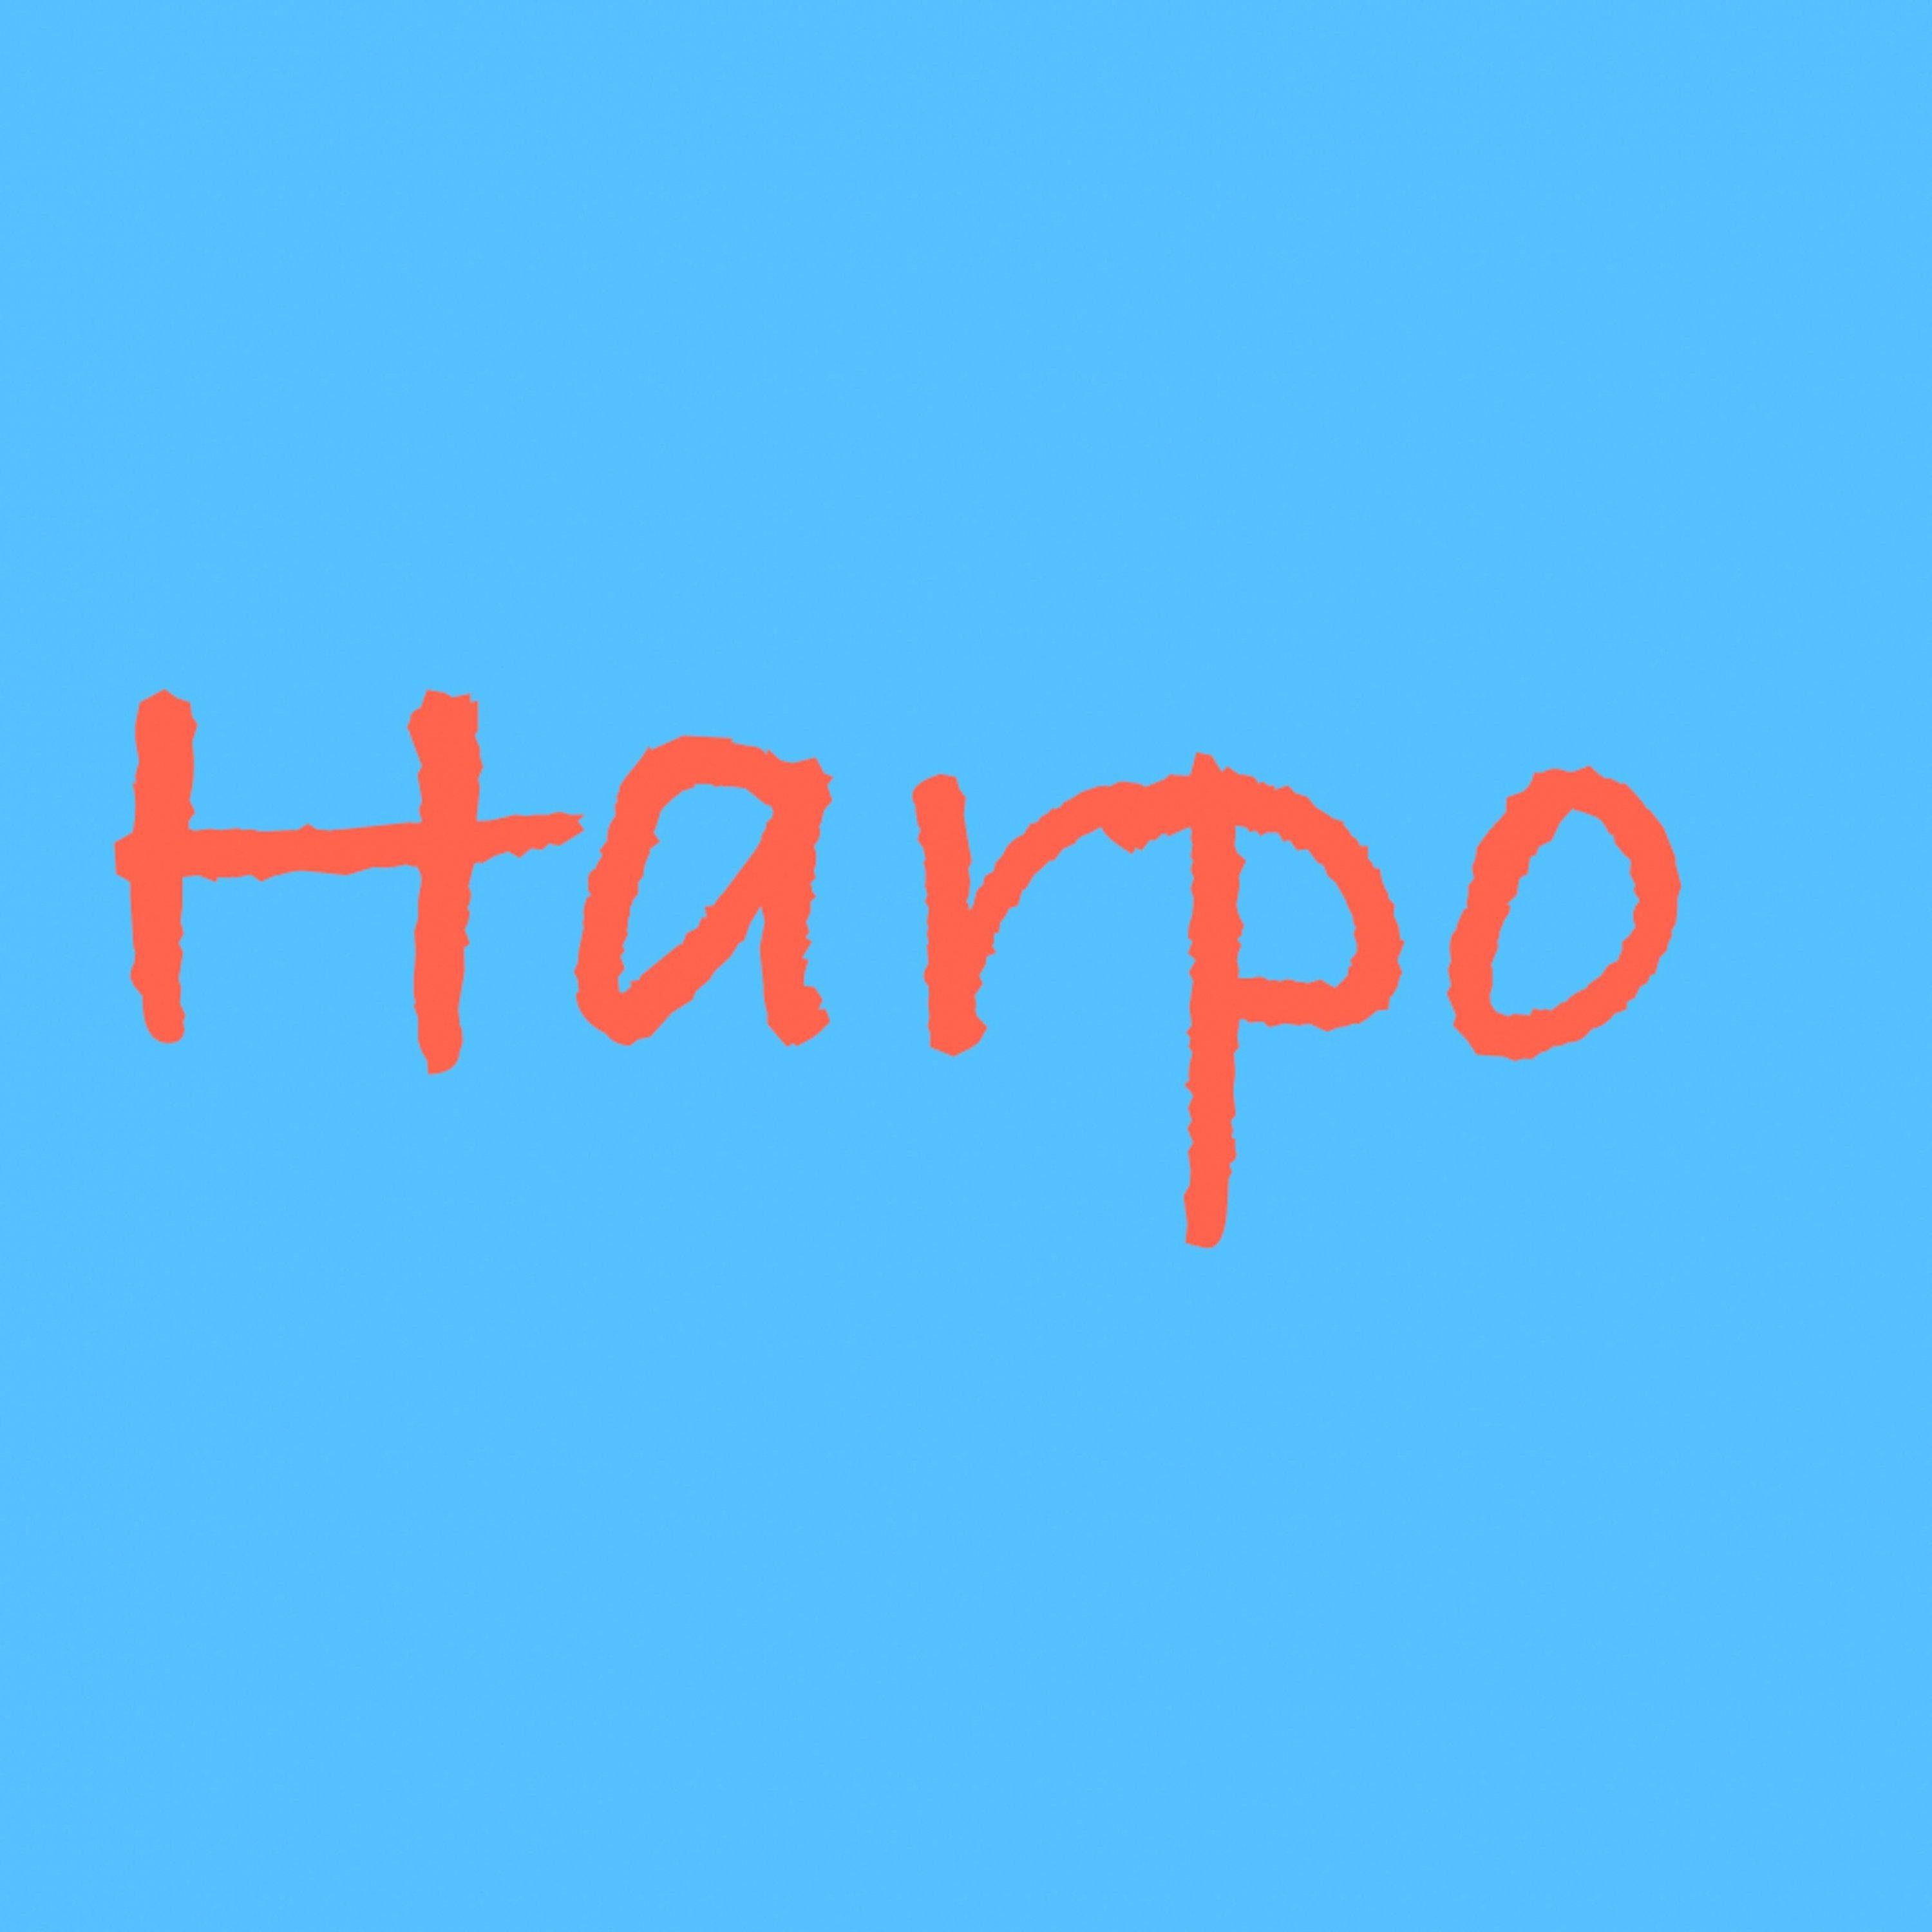 Harpo - Pantomime